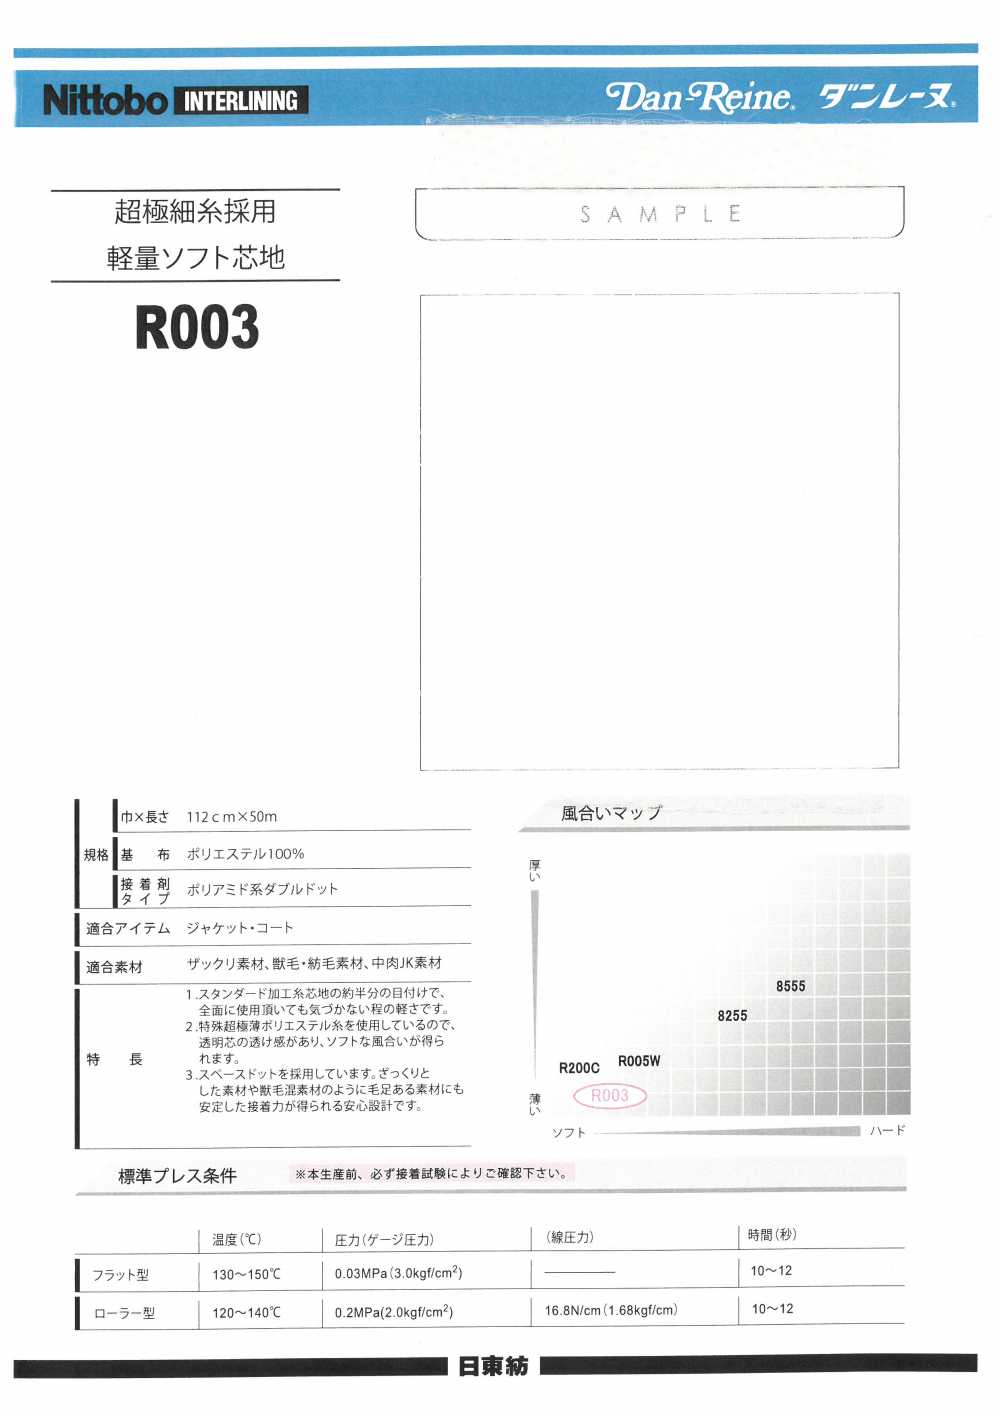 R003 采用超线轻质柔软衬布11D 日东纺绩